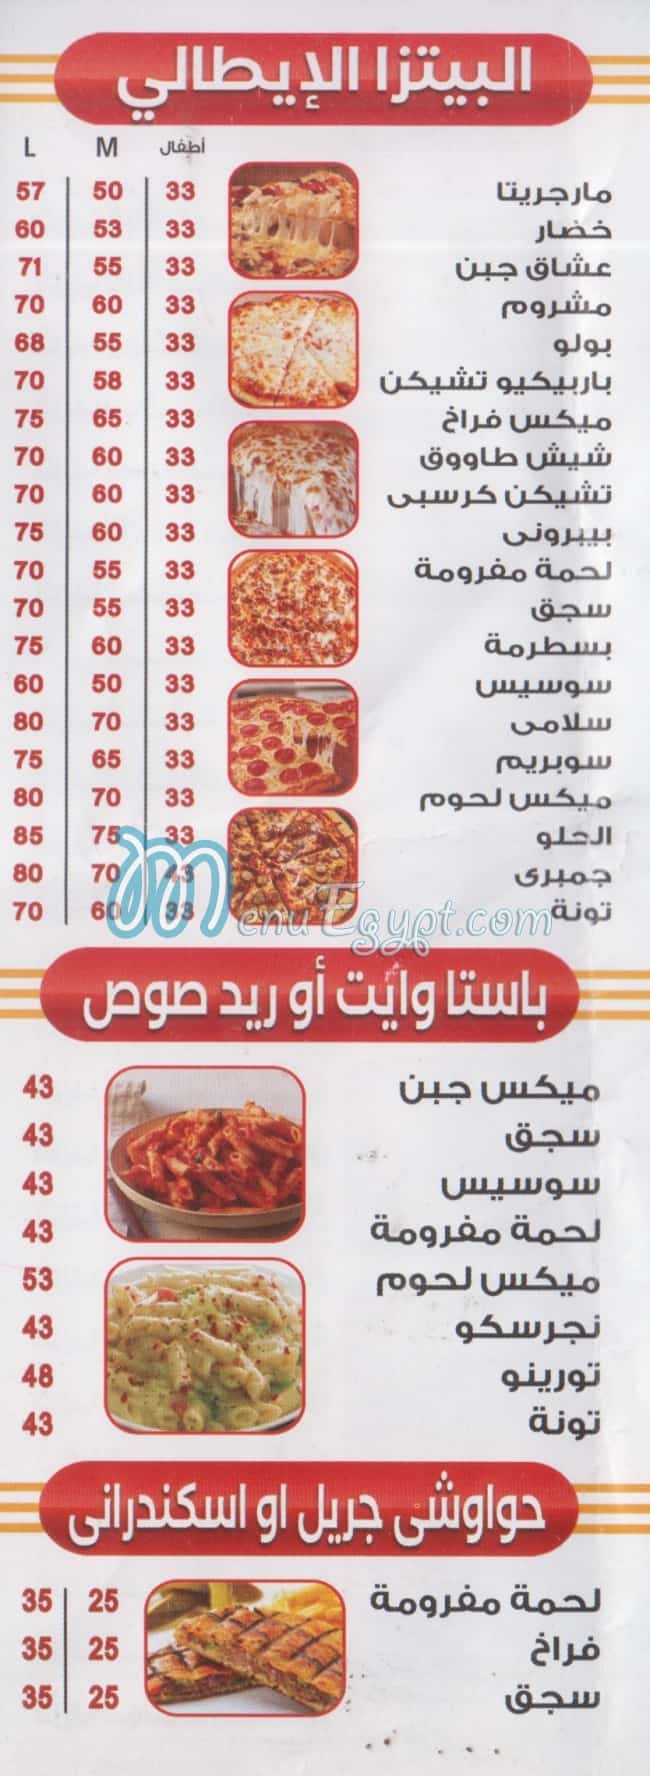 El Helw Restaurant menu Egypt